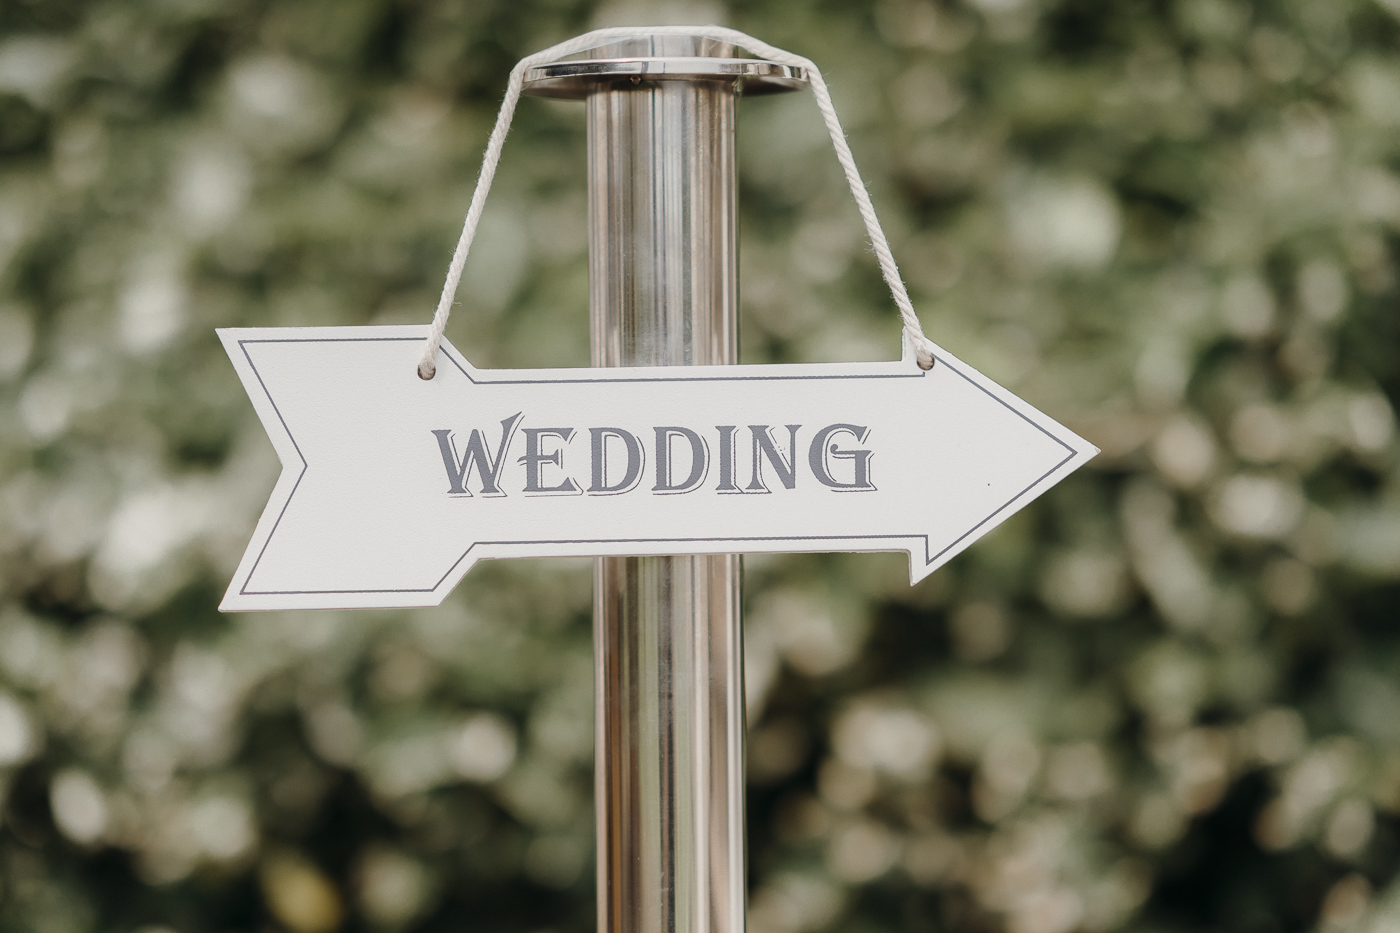 A Wedding sign